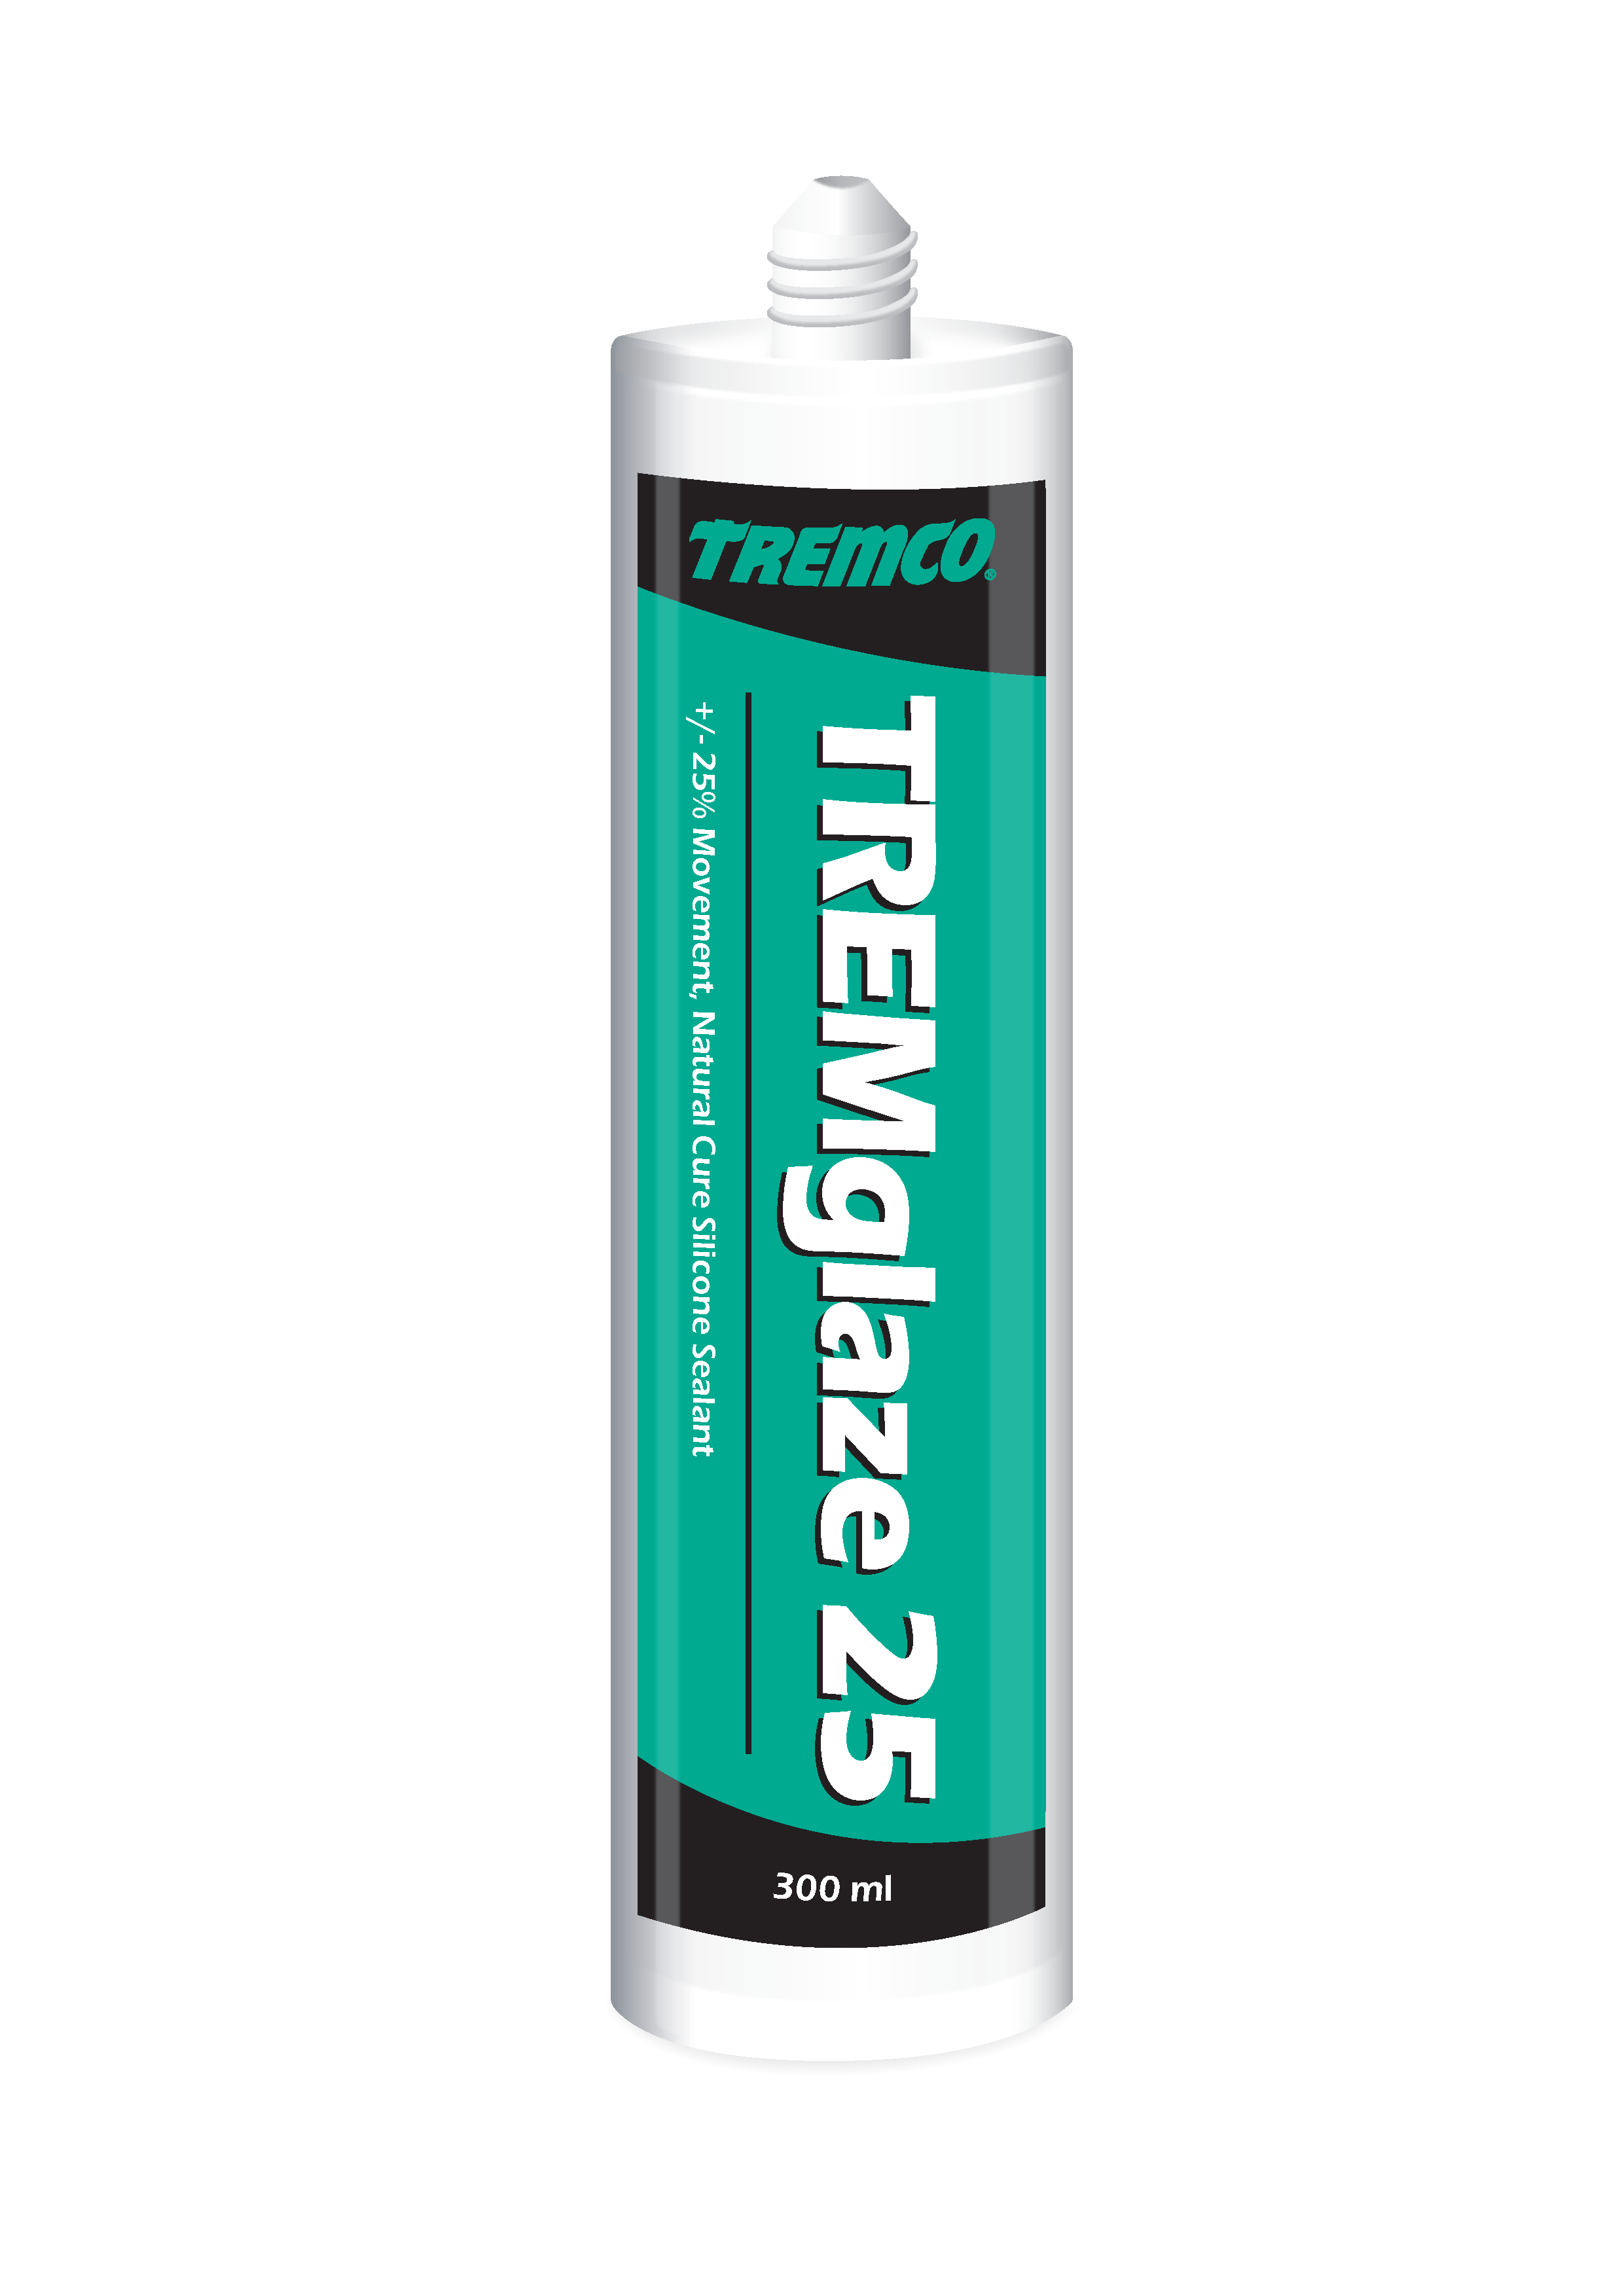 TREMglaze gun grade silicone sealant in tube